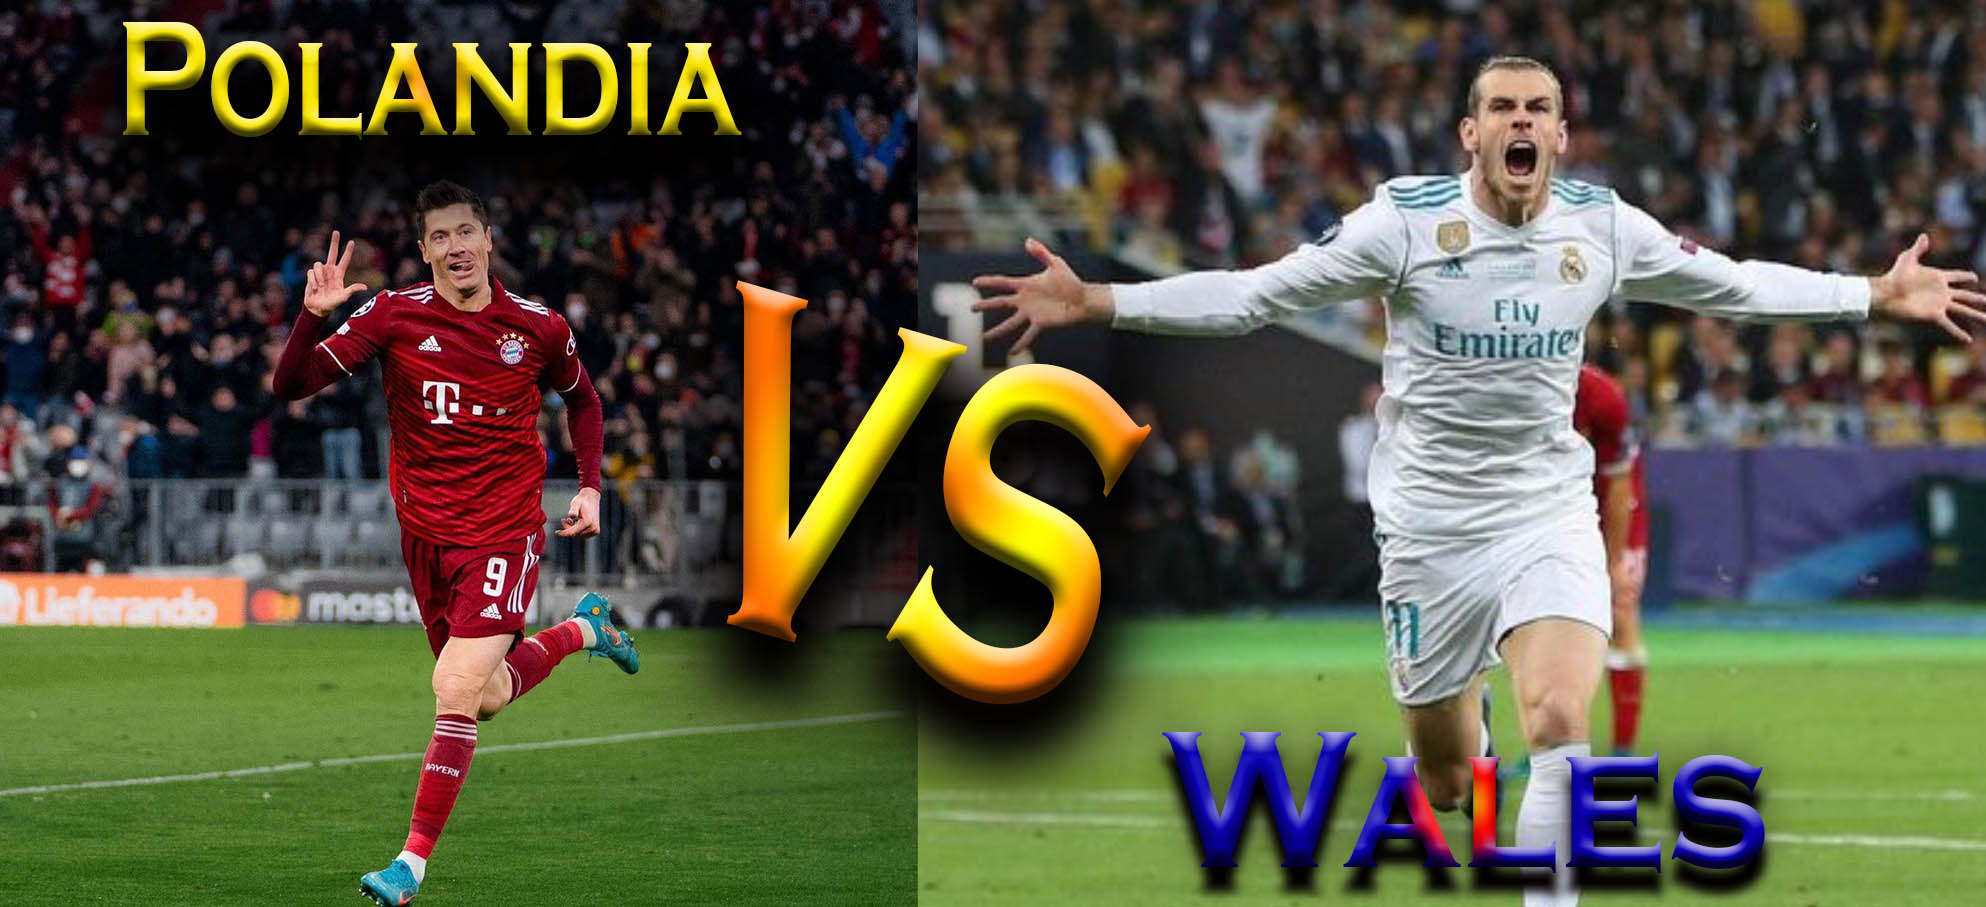 Polandia vs Wales